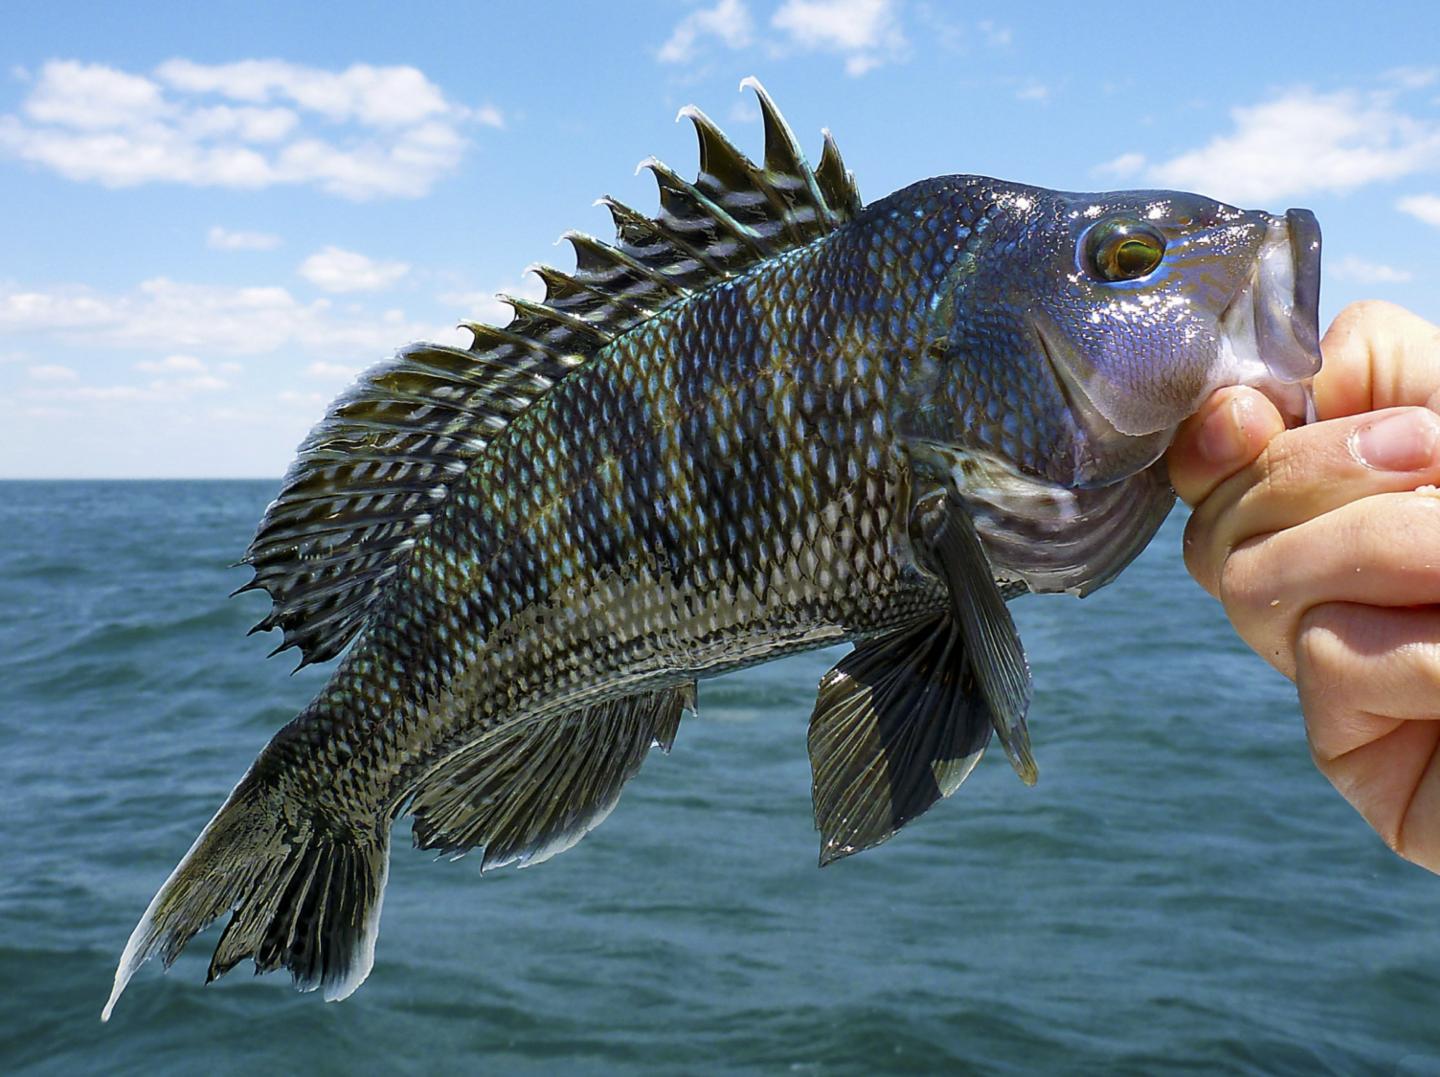 A black sea bass fish